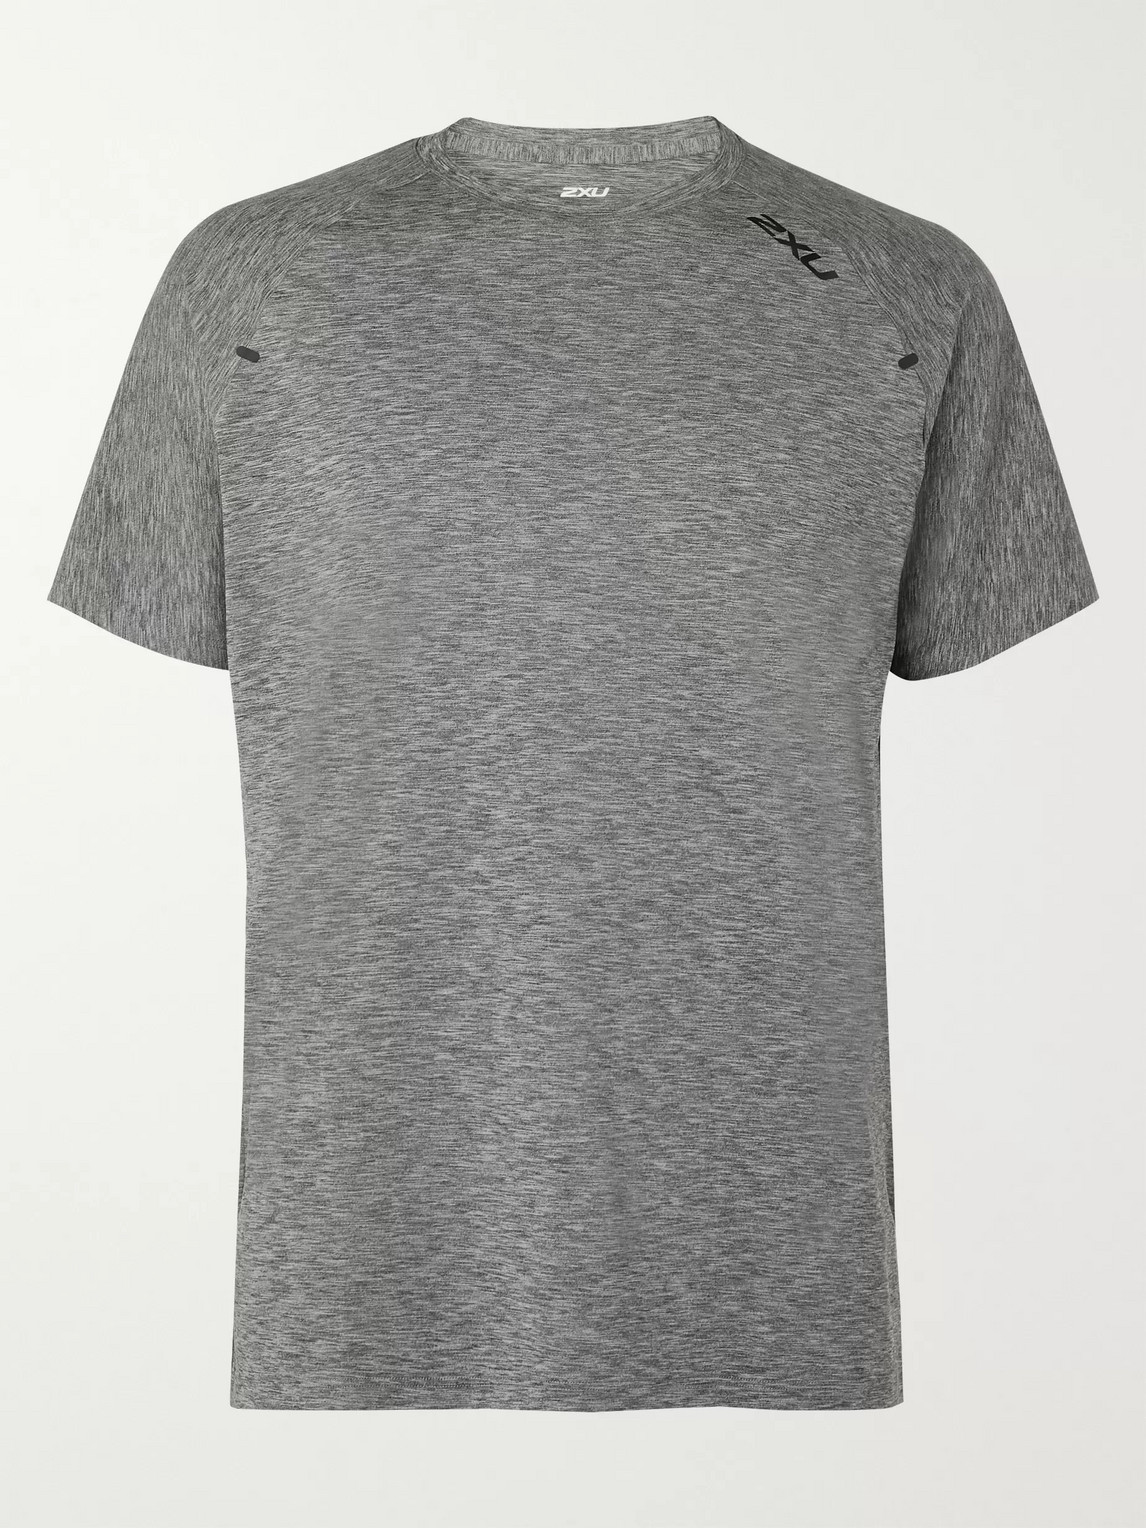 2xu X-ctrl Perforated Mélange Jersey T-shirt In Gray